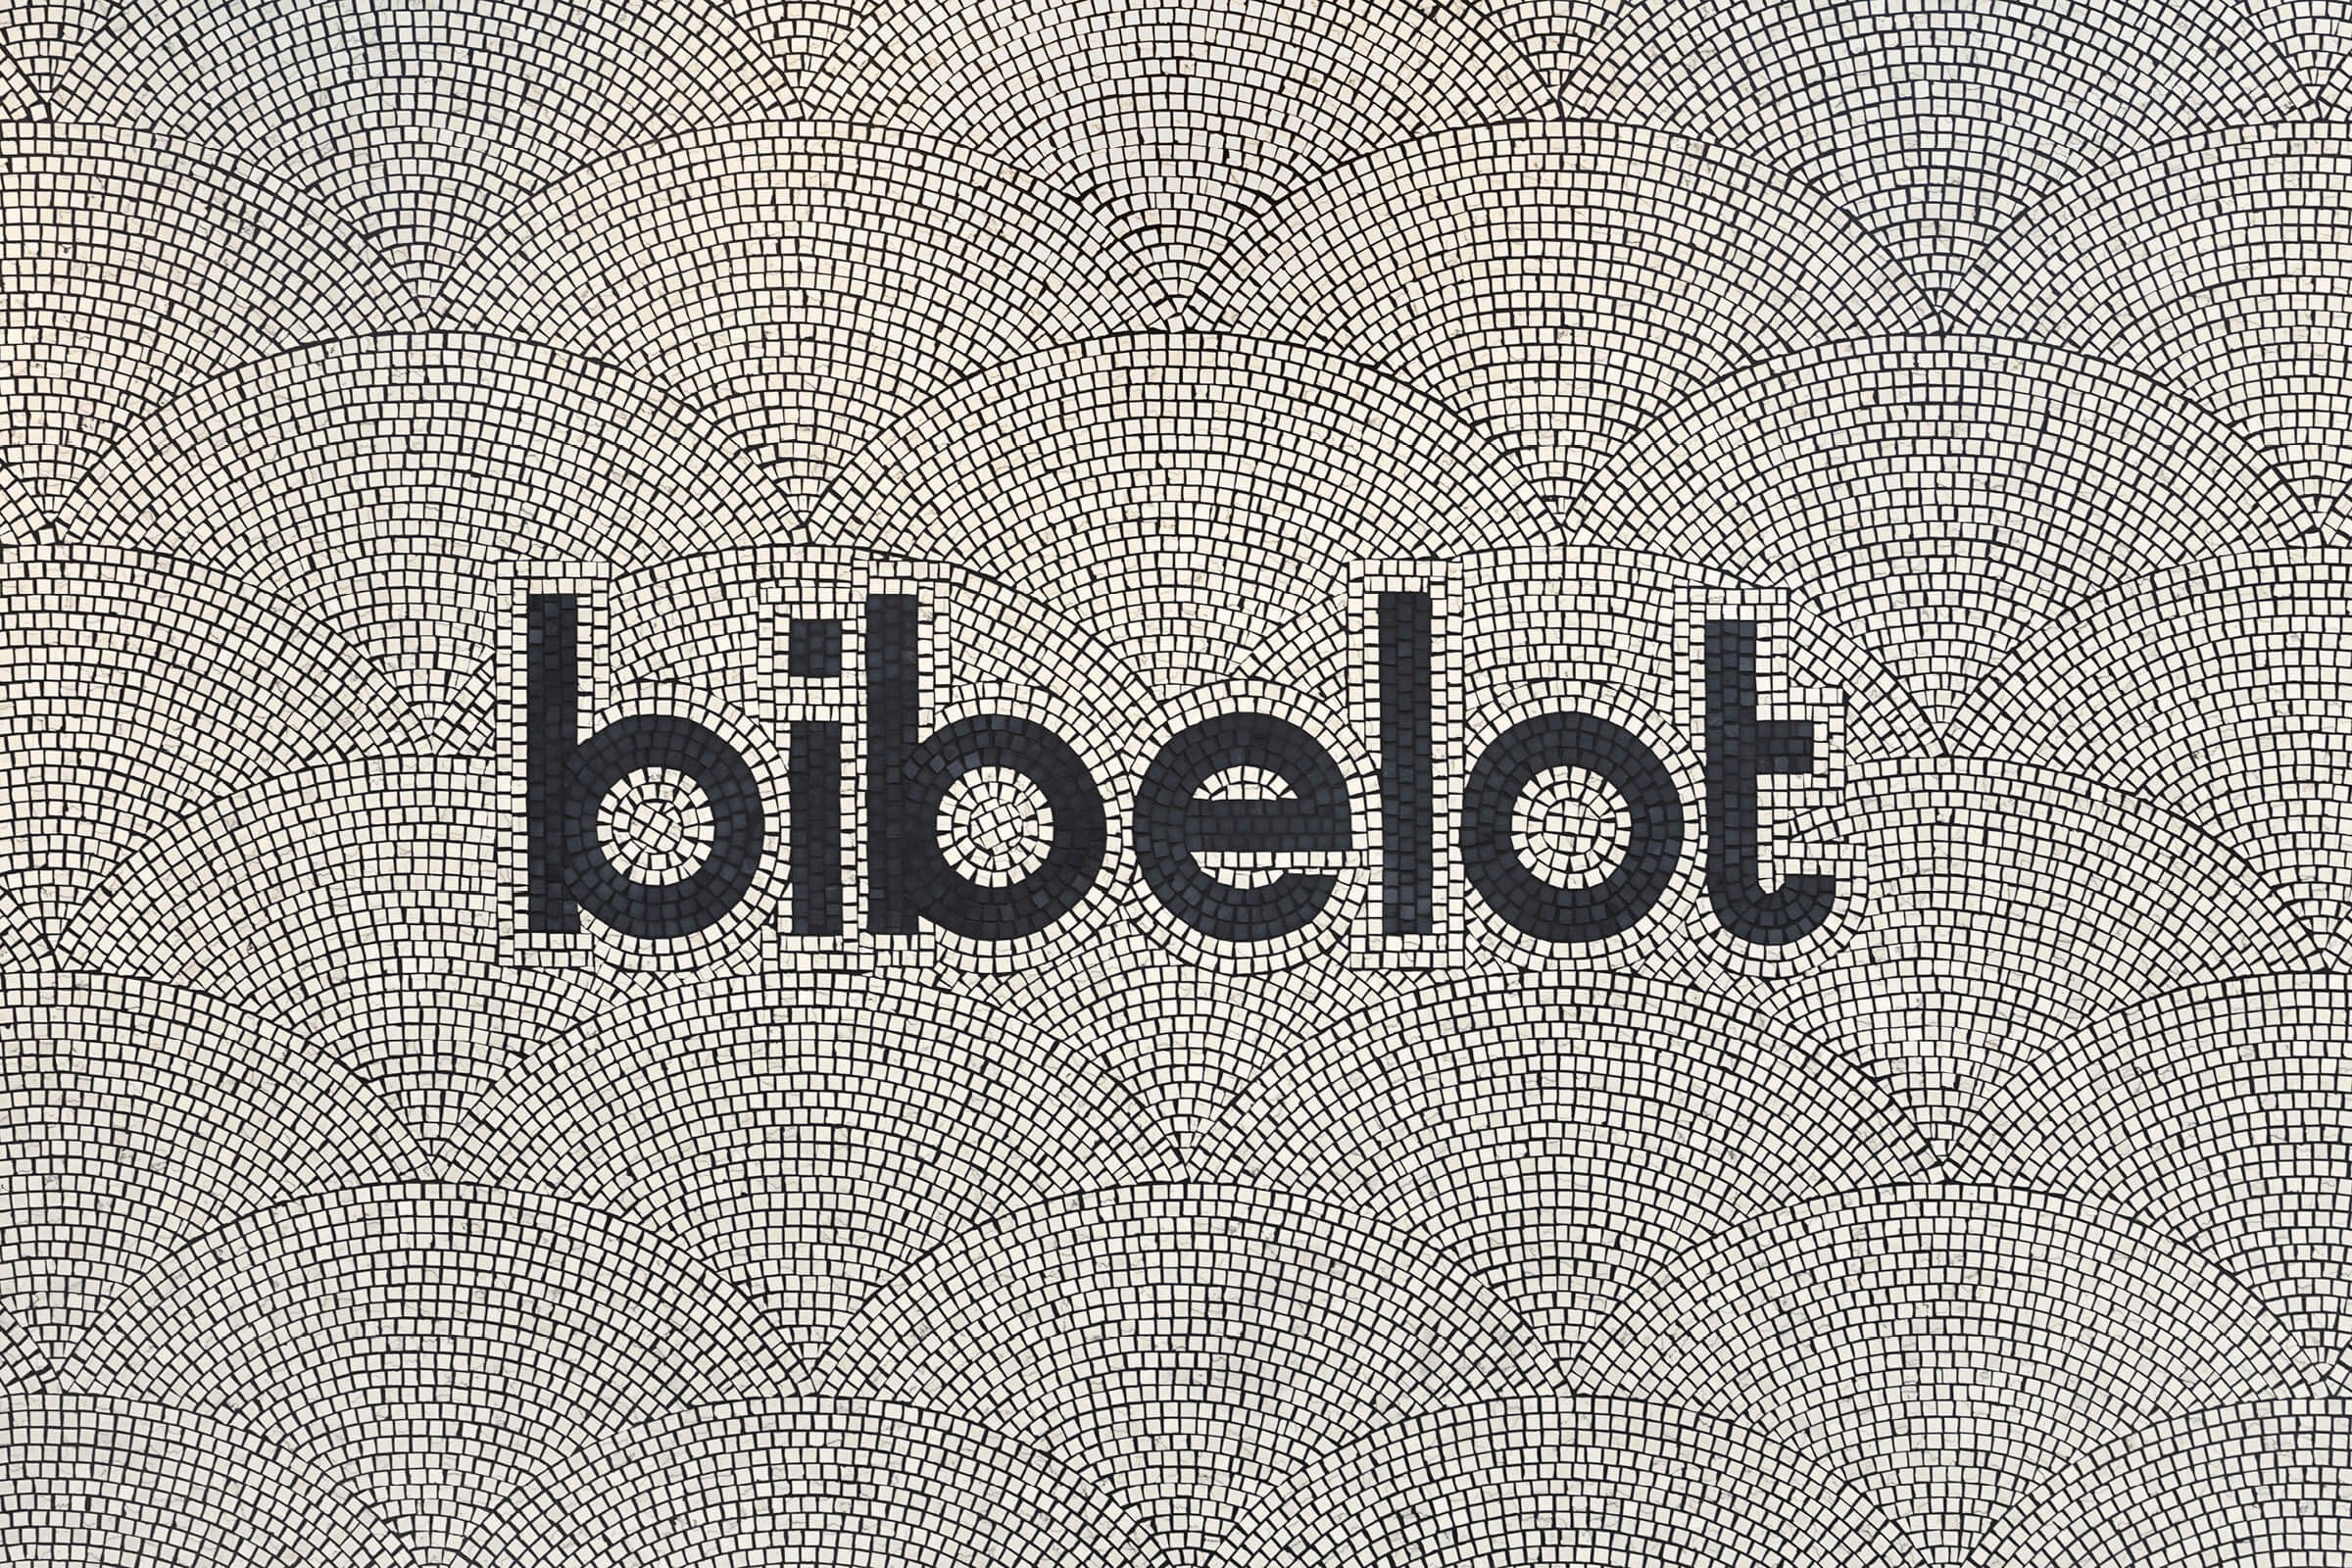 Logotype for dessert boutique Bibelot designed by A Friend Of Mine